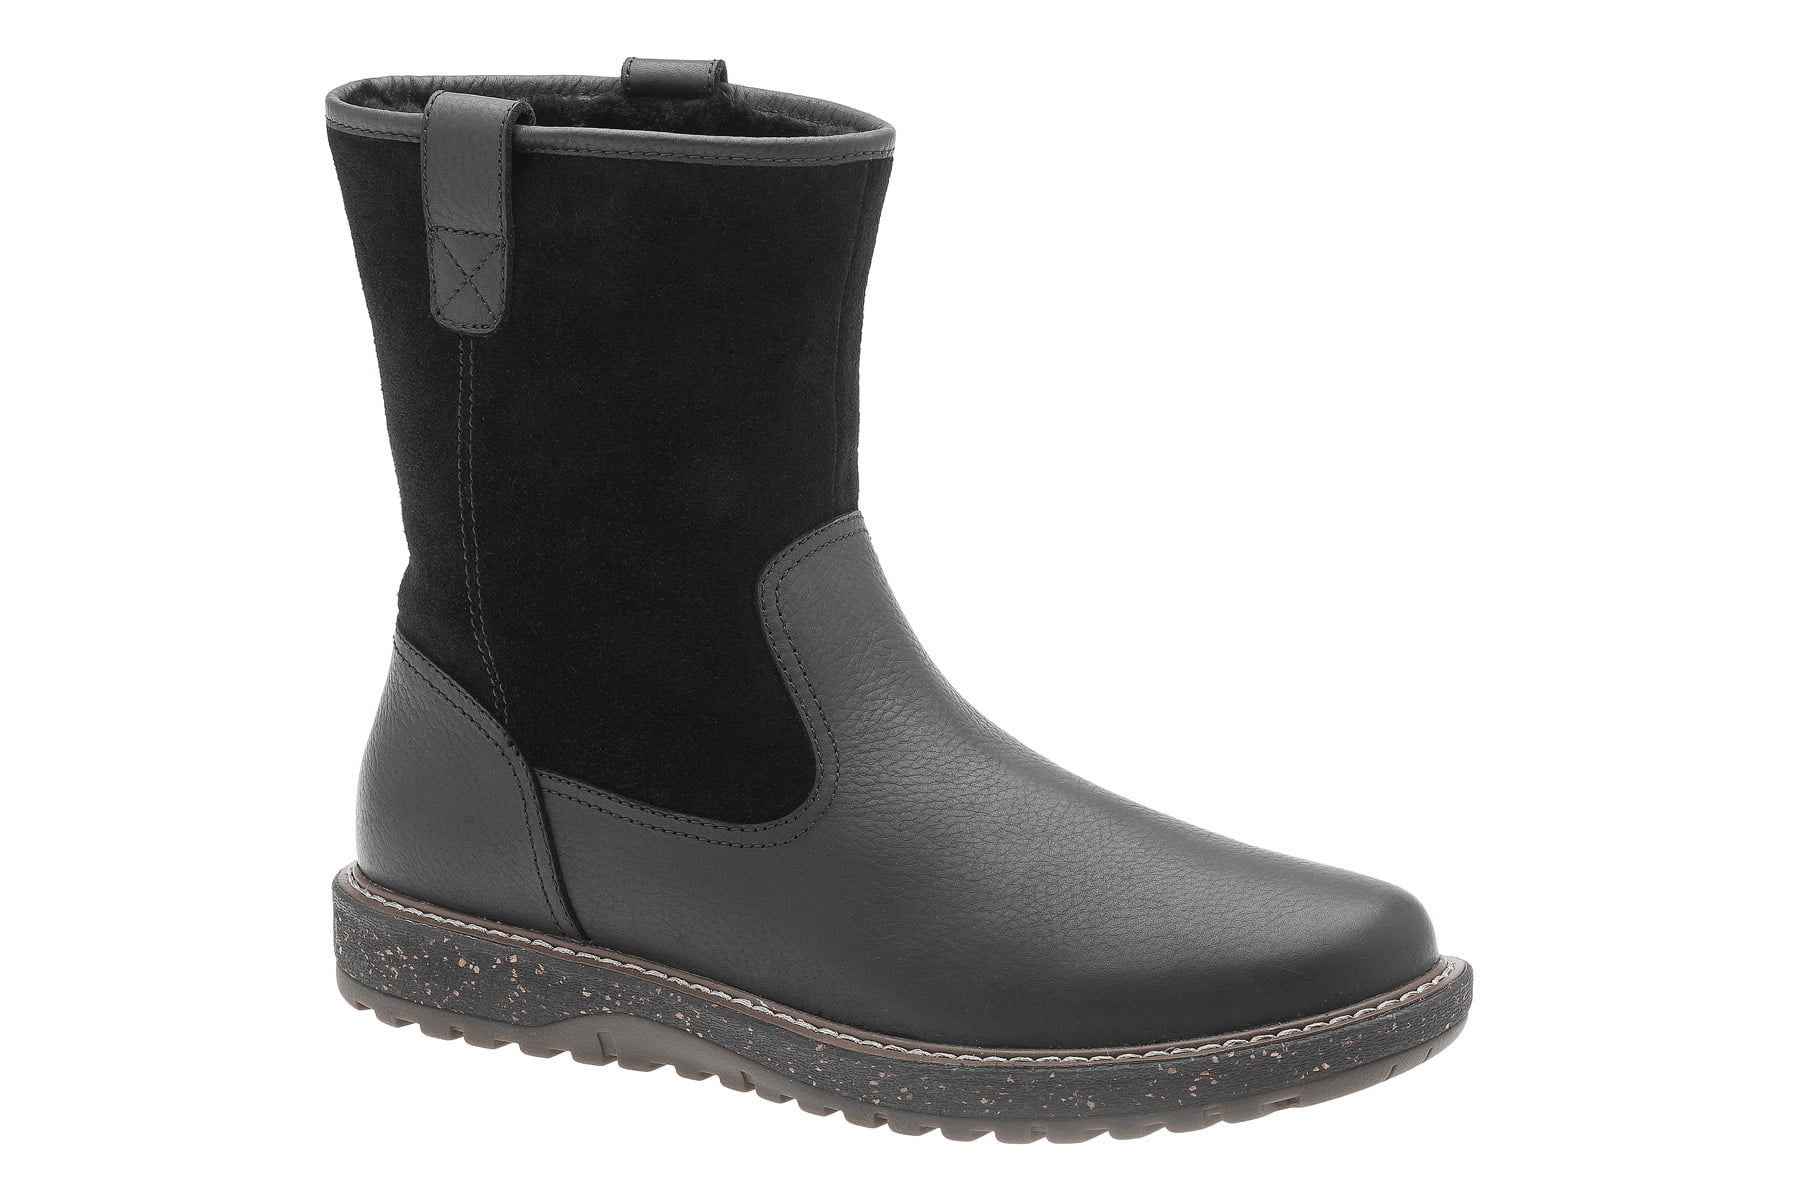 ABEO Bryson - Shearling Boots in Black - Walmart.com